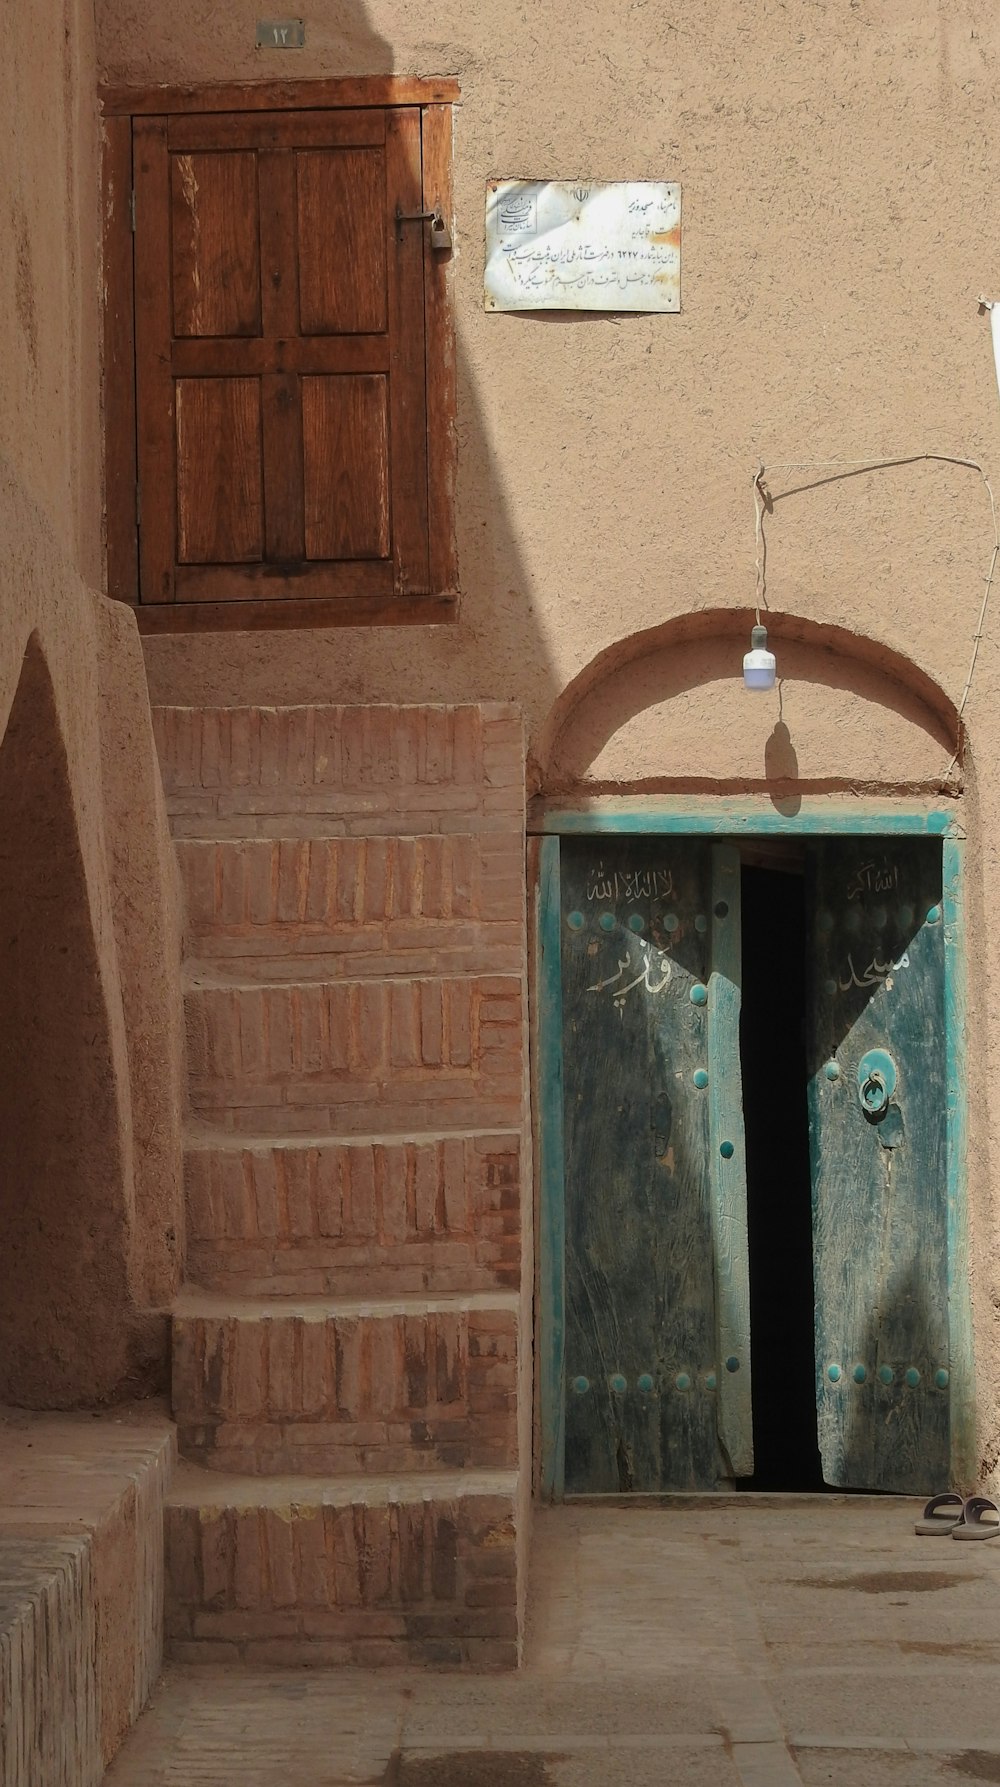 two doors are open in a doorway of a building